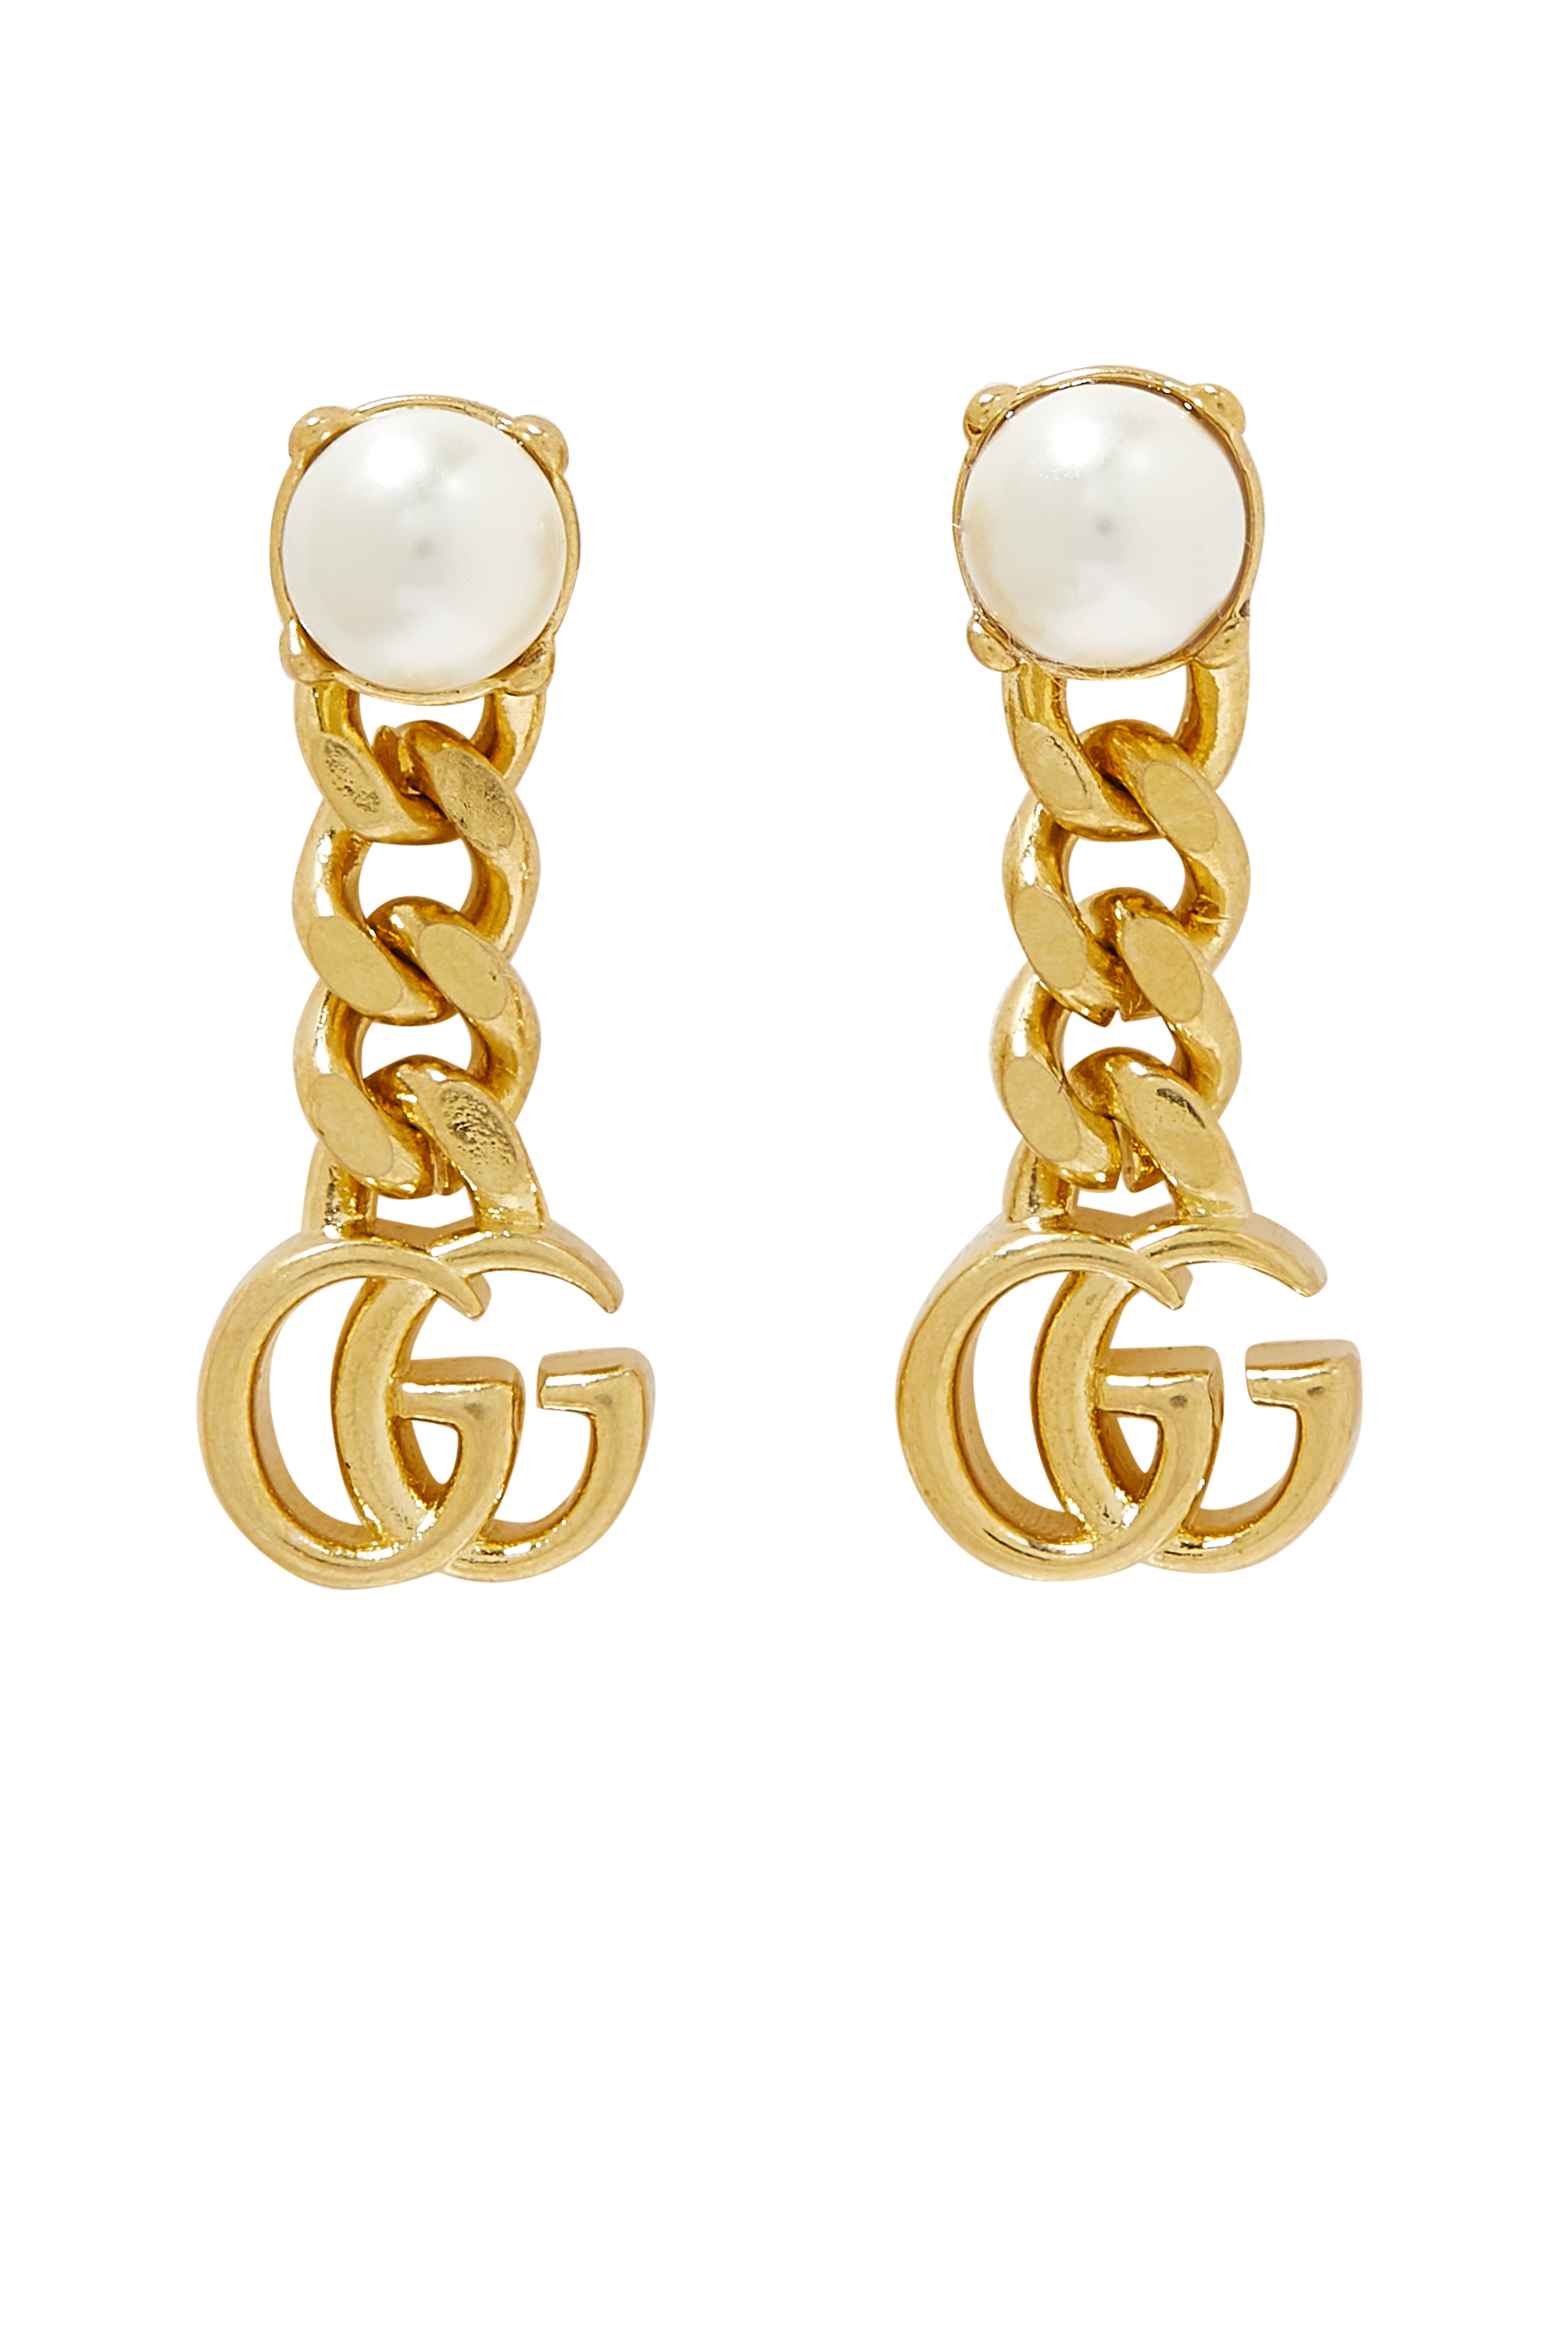 Buy Gucci Pearl Double G Earrings for Womens | Bloomingdale's Kuwait